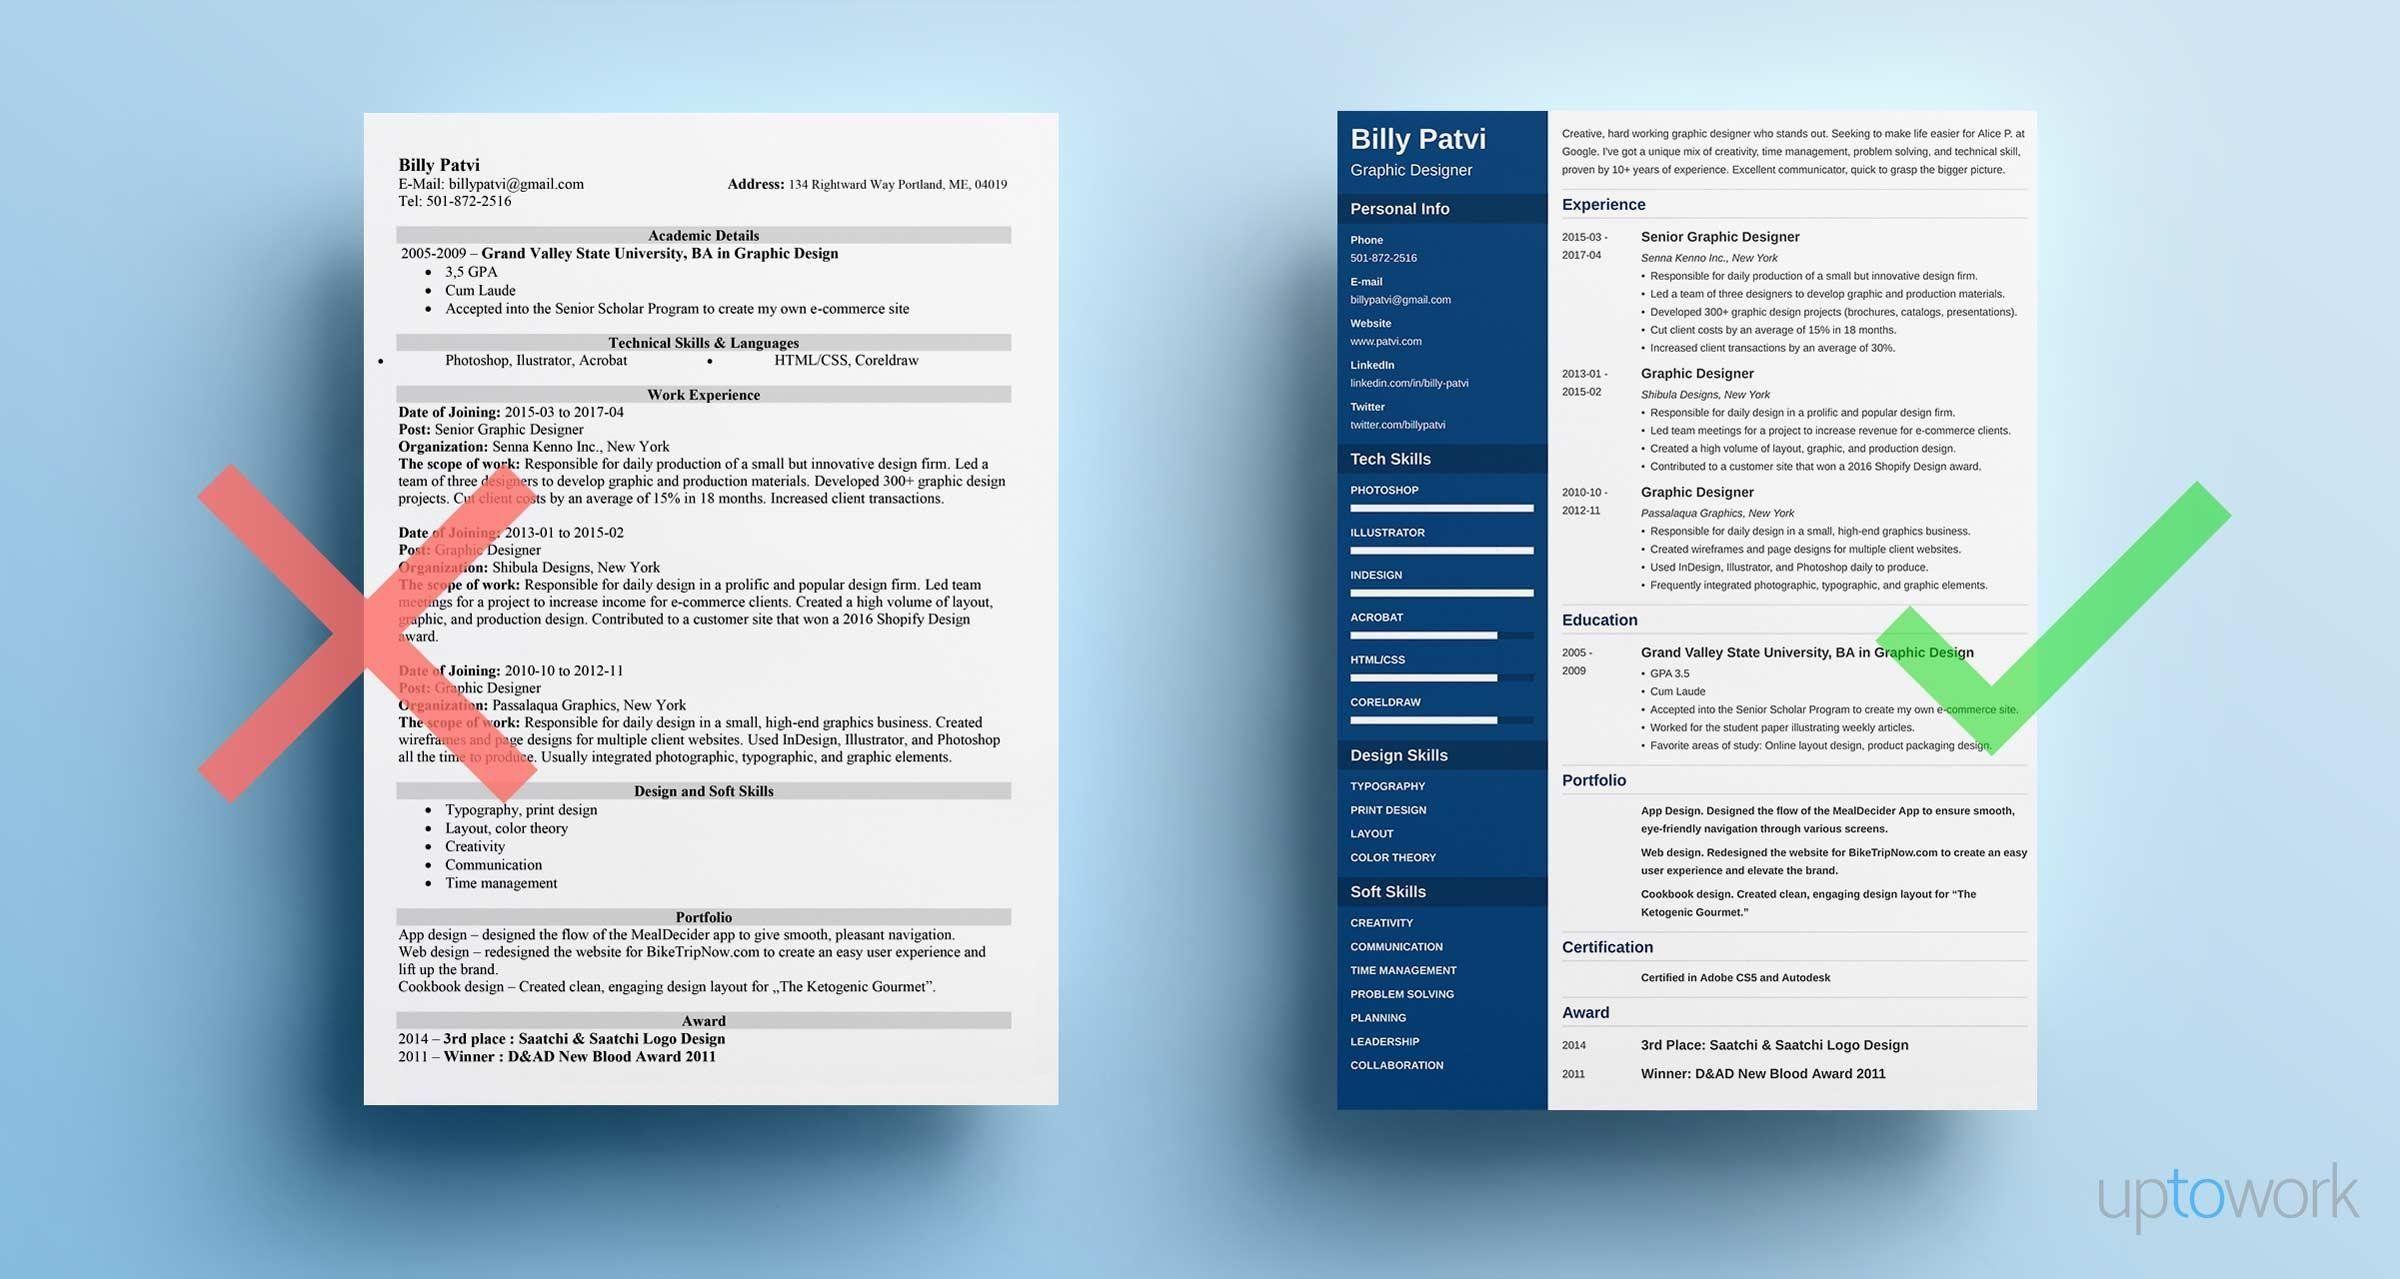 Resume Logo - Graphic Design Resume: Sample & Guide [+20 Examples]